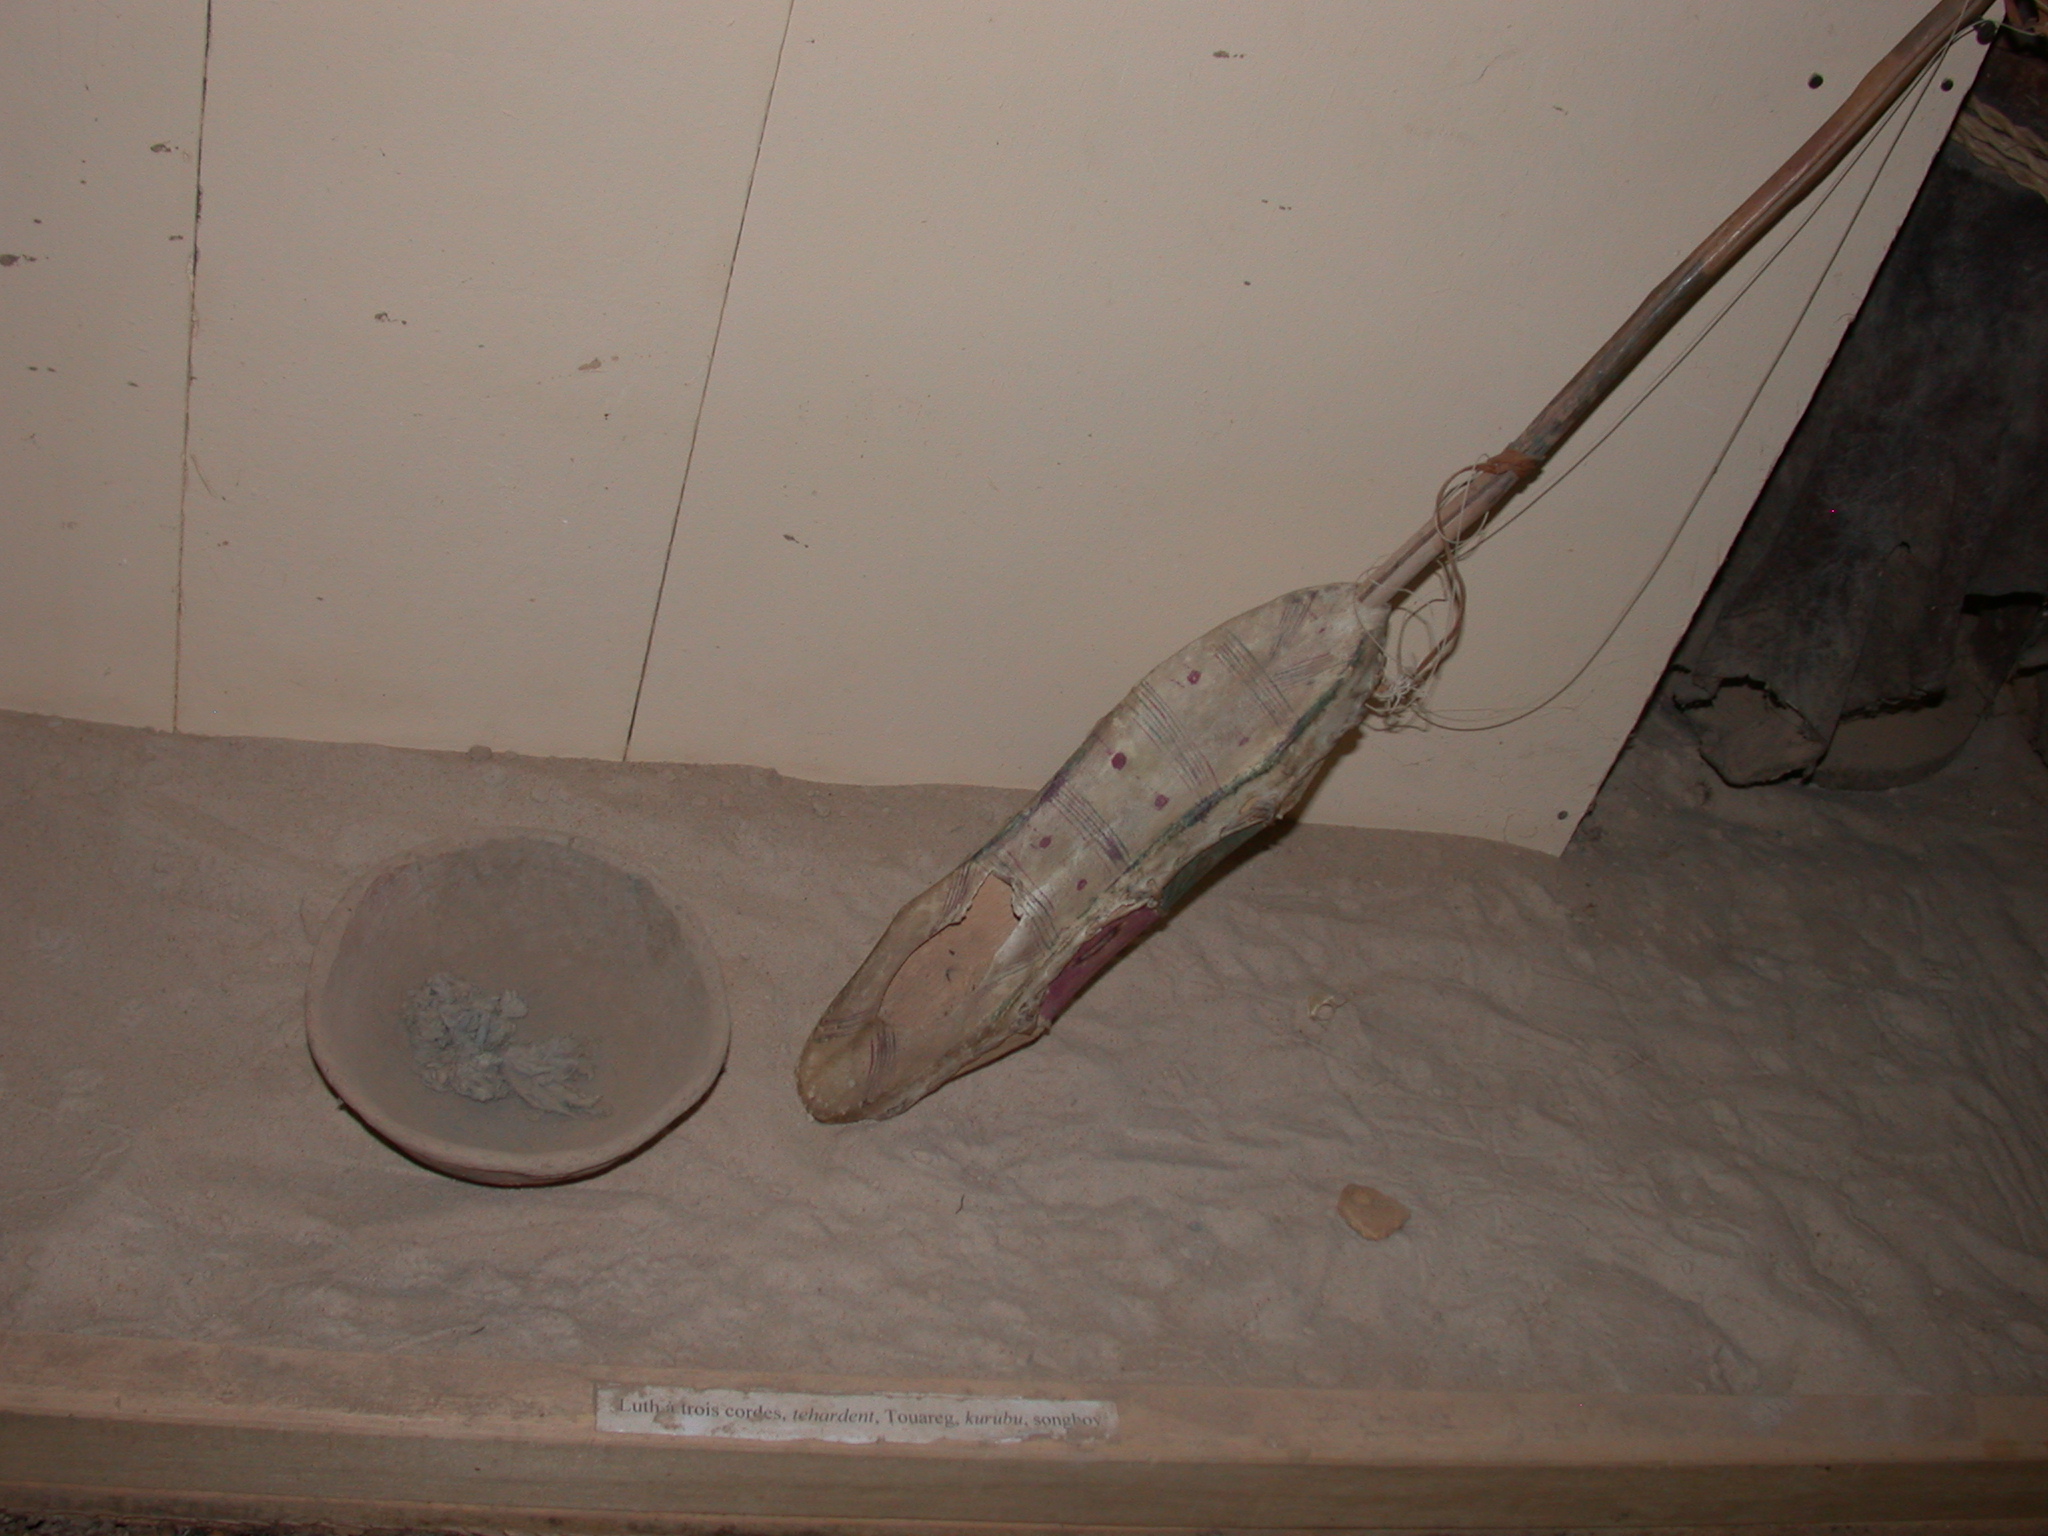 Three-Stringed Lute, Tehardent in Tuareg, Kurubu in Songhay, Timbuktu Ethnological Museum, Timbuktu, Mali